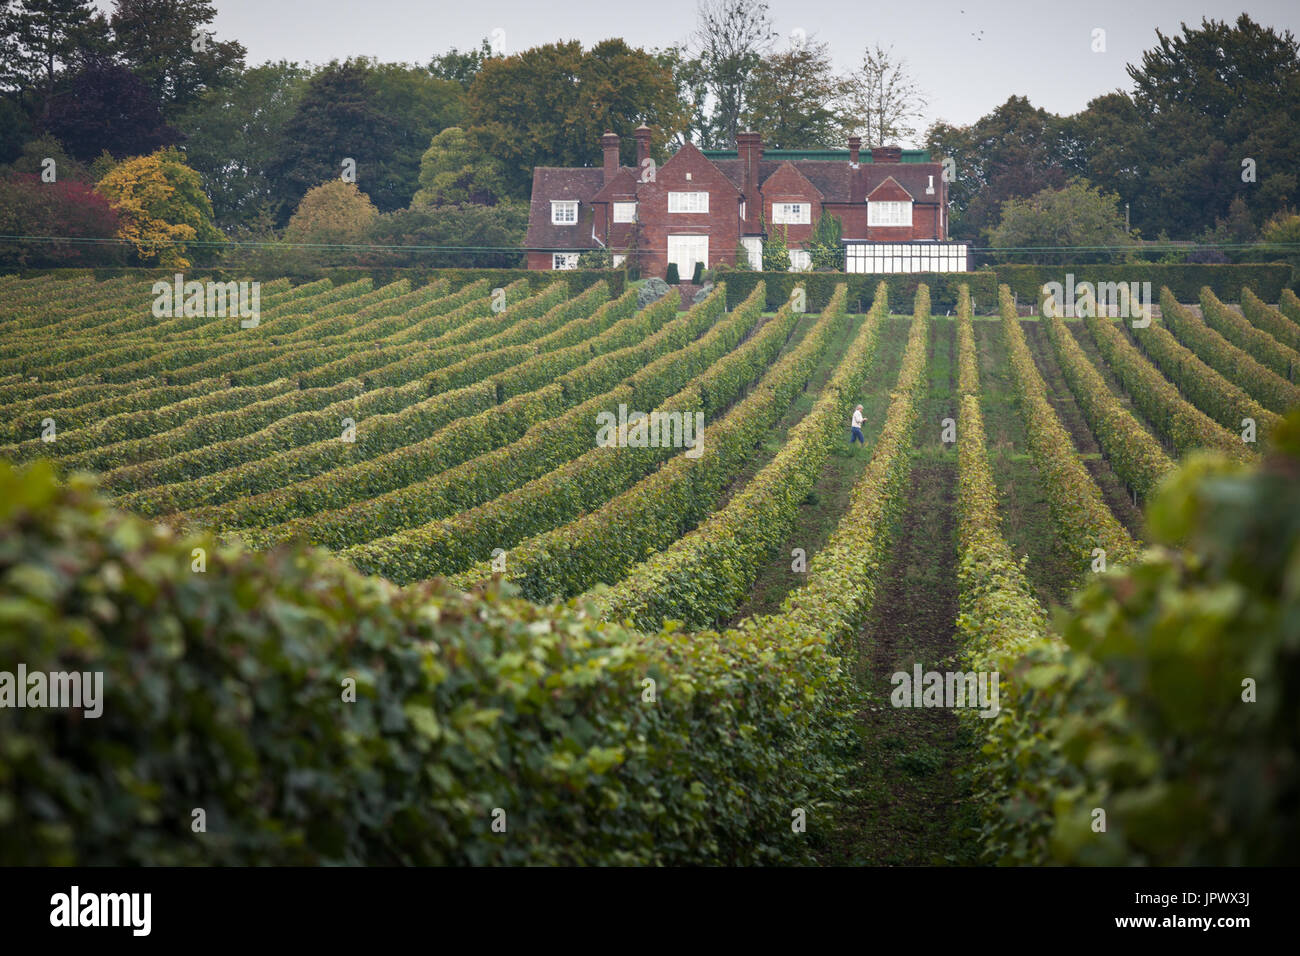 Rows of vines at Hambledon Vineyard in Hampshire, England Stock Photo